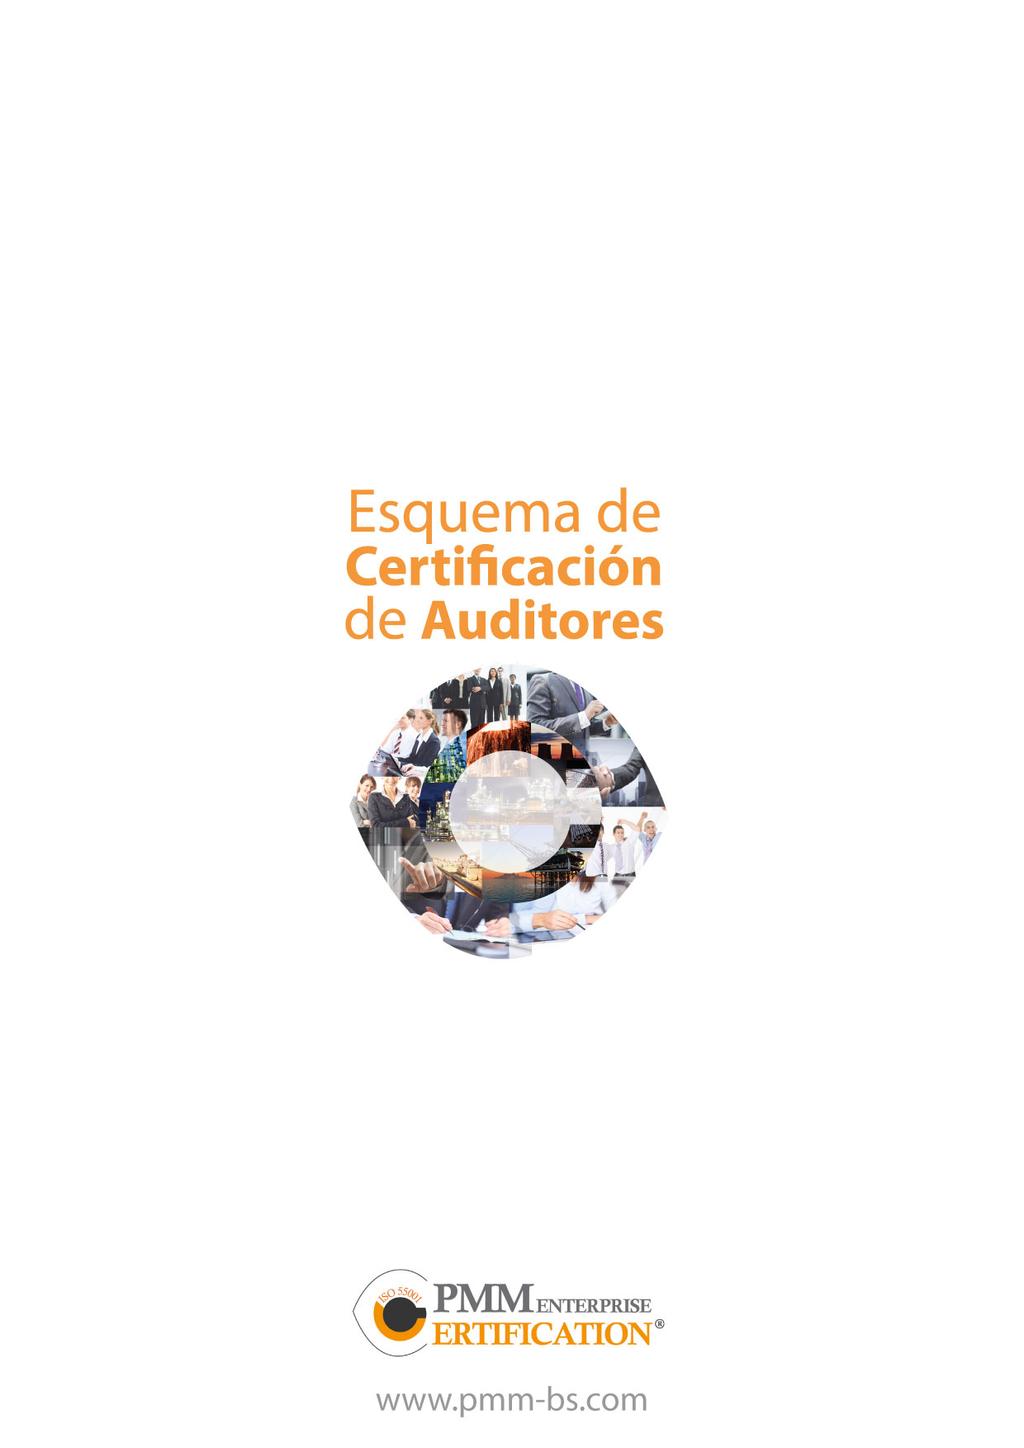 PMM Enterprise Certification pmm-bs.